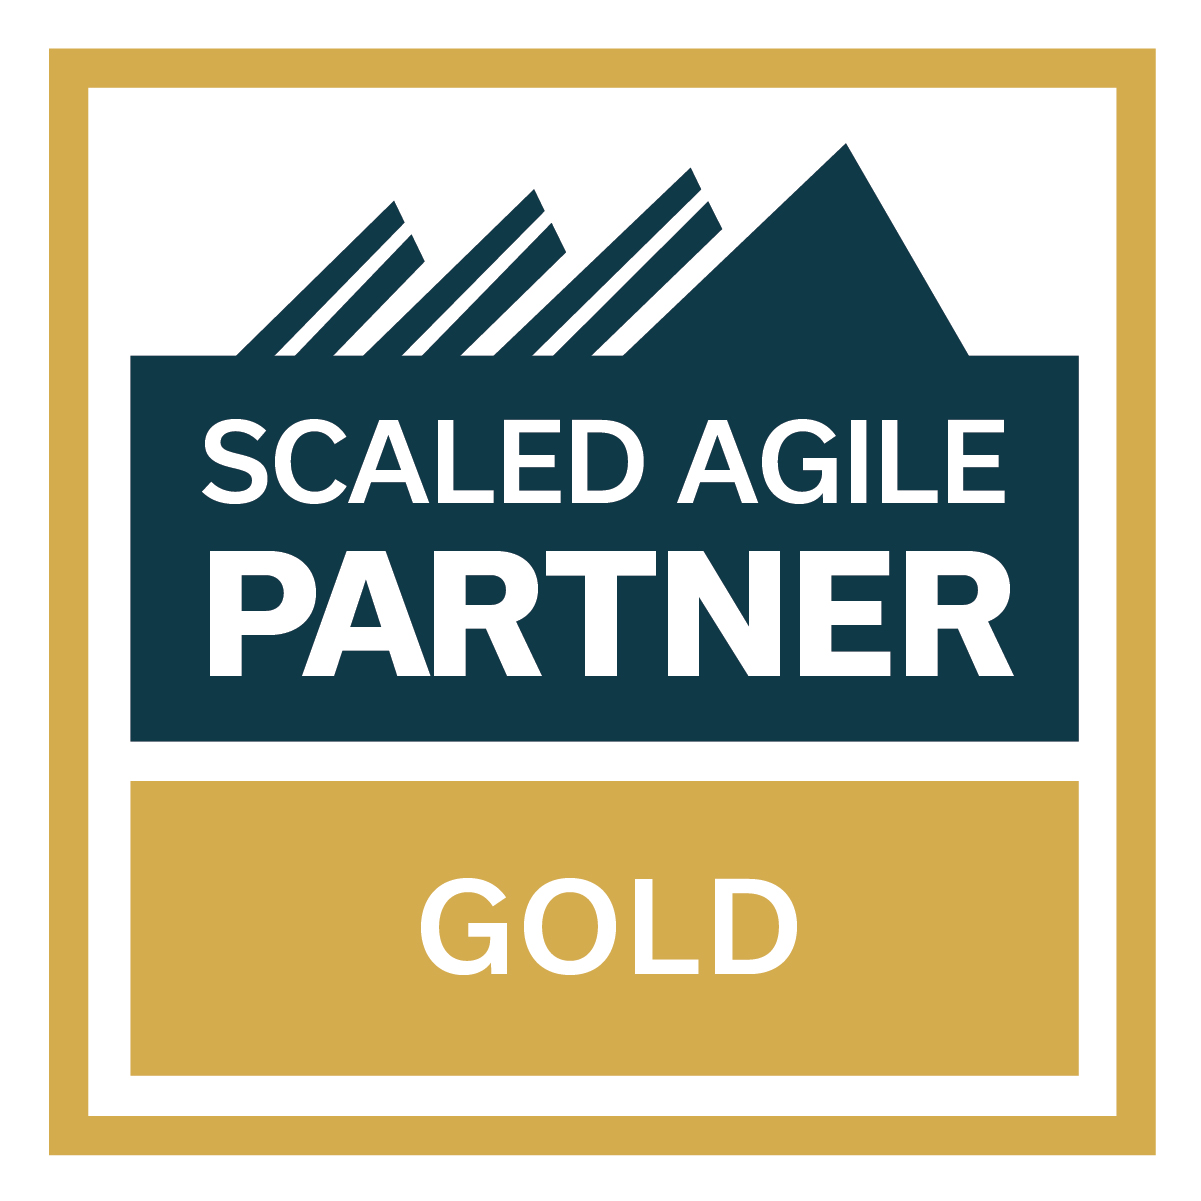 Scaled Agile Partner Gold